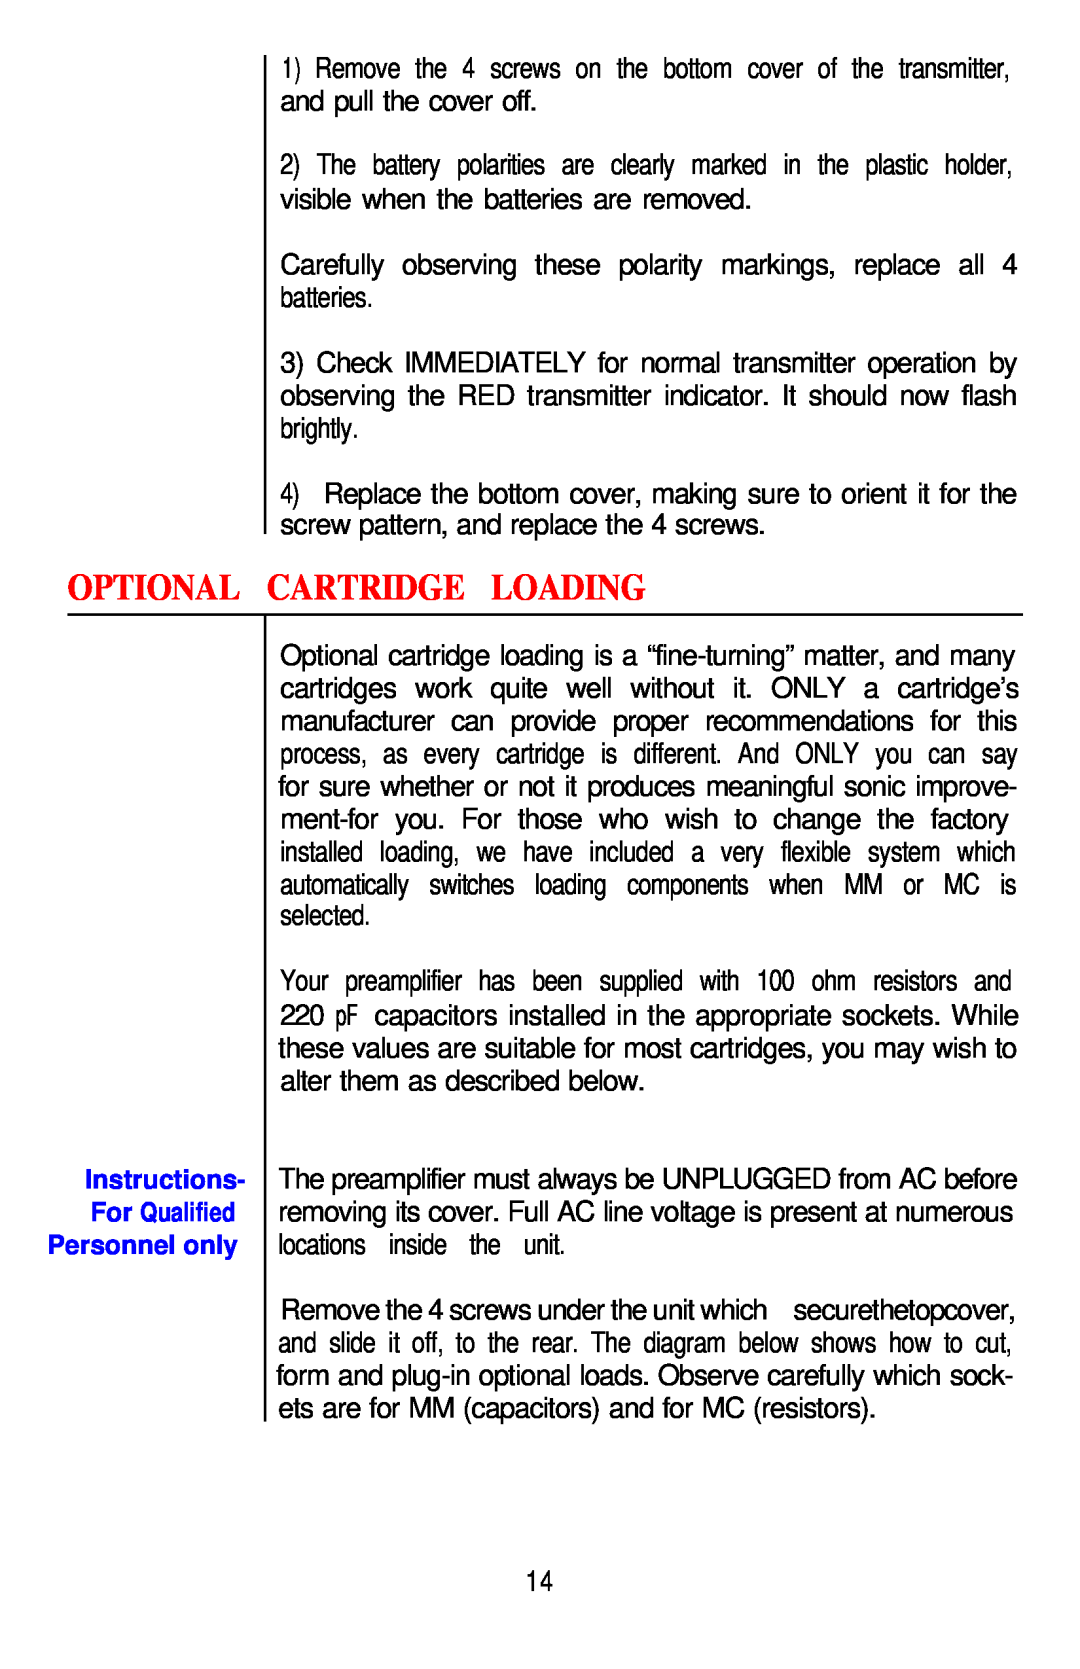 Hafler IRIS manual Optional Cartridge Loading 